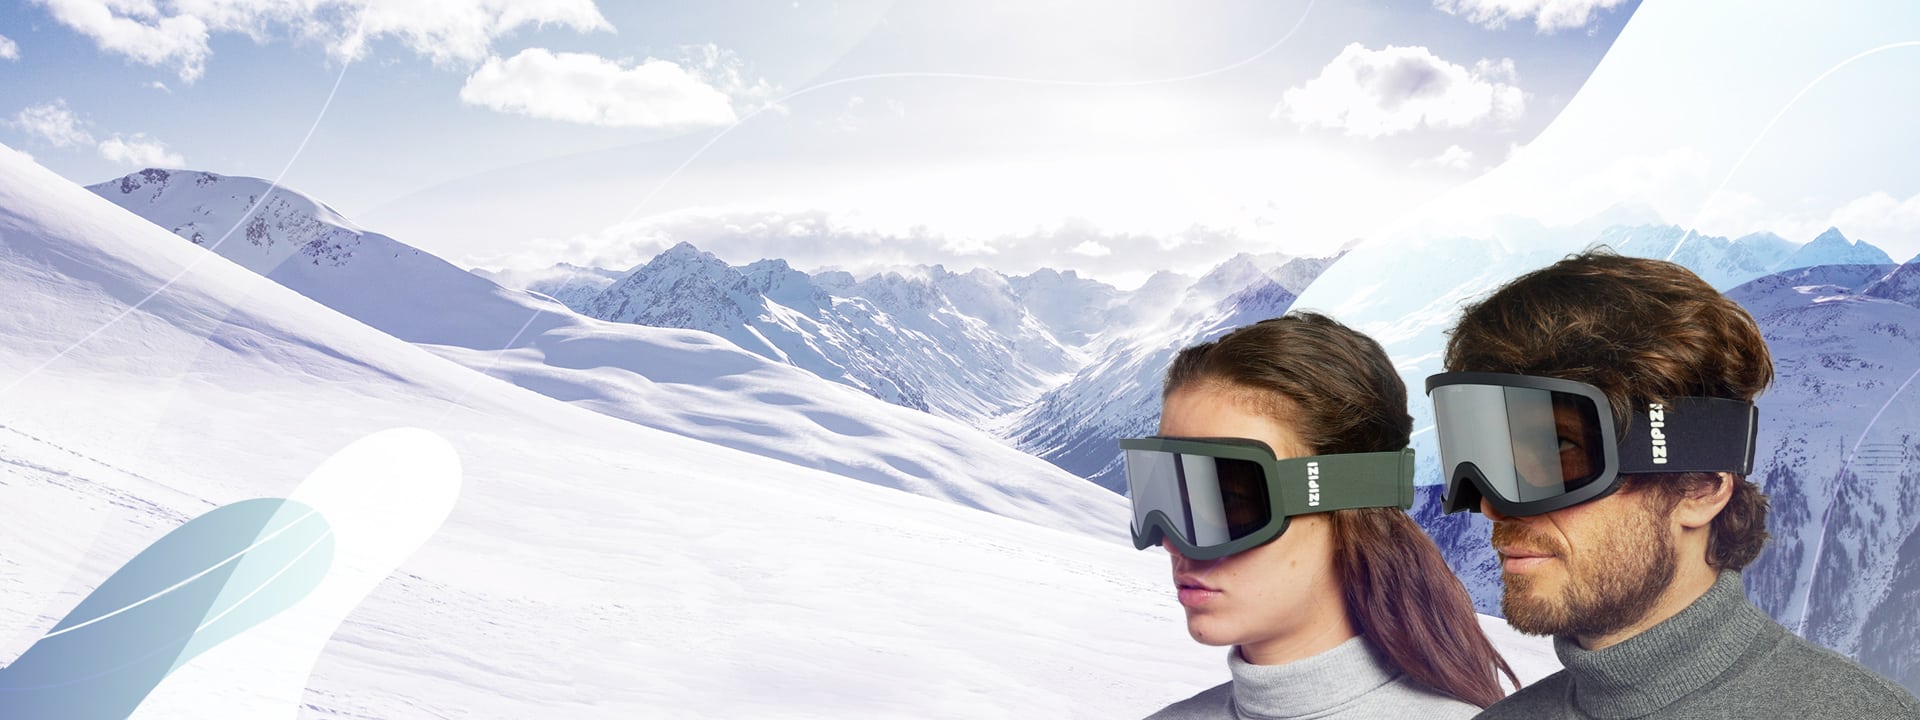 medoc optique vision ski 1